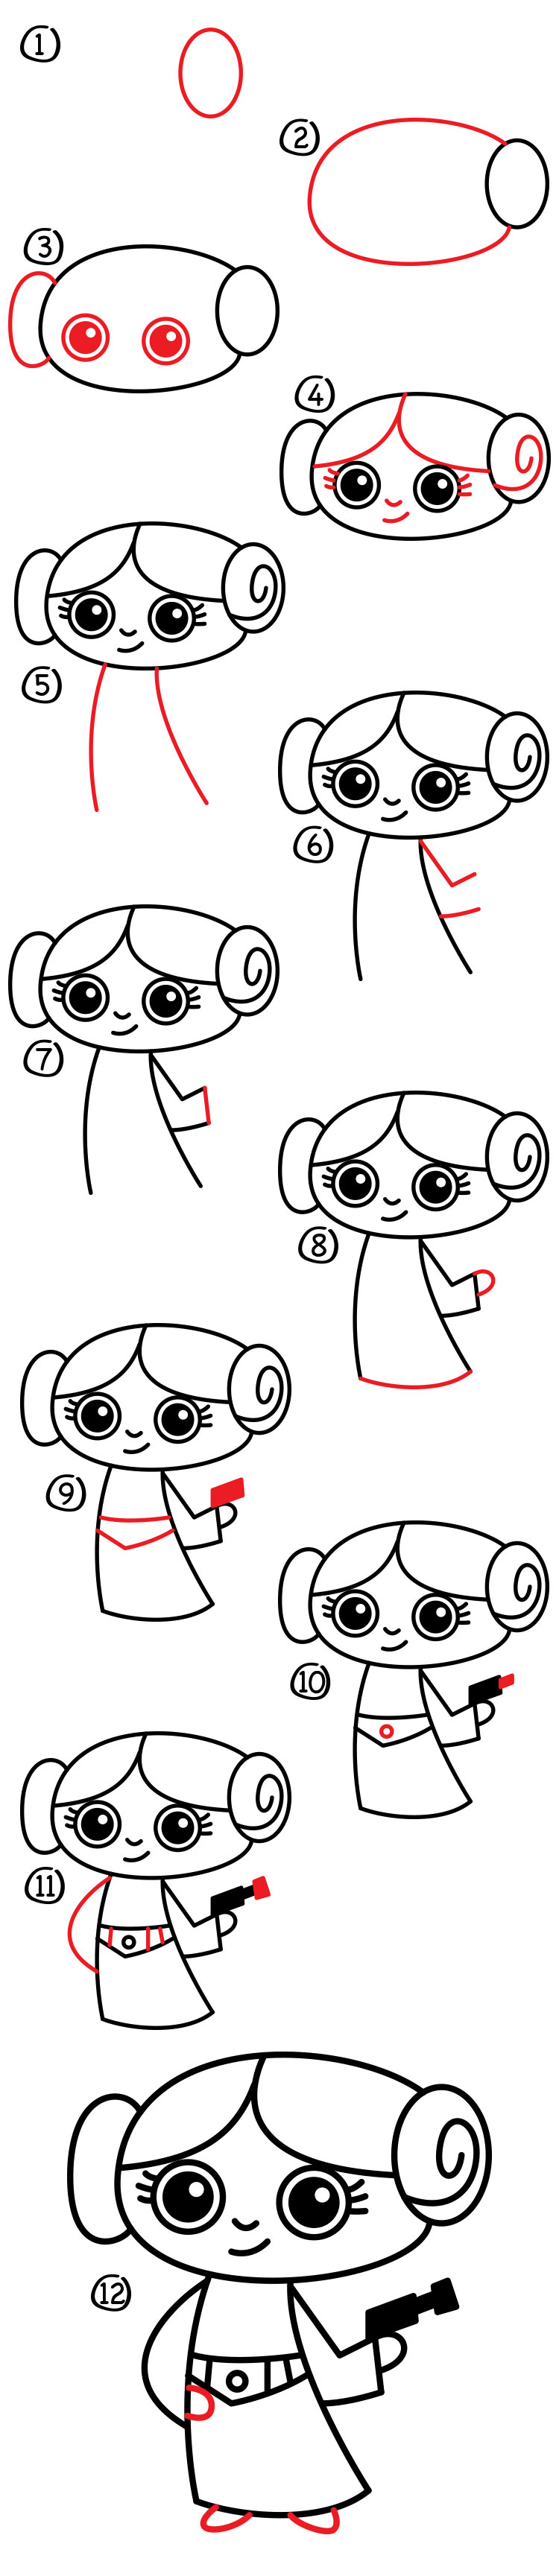 How To Draw Cartoon Princess Leia - Art For Kids Hub